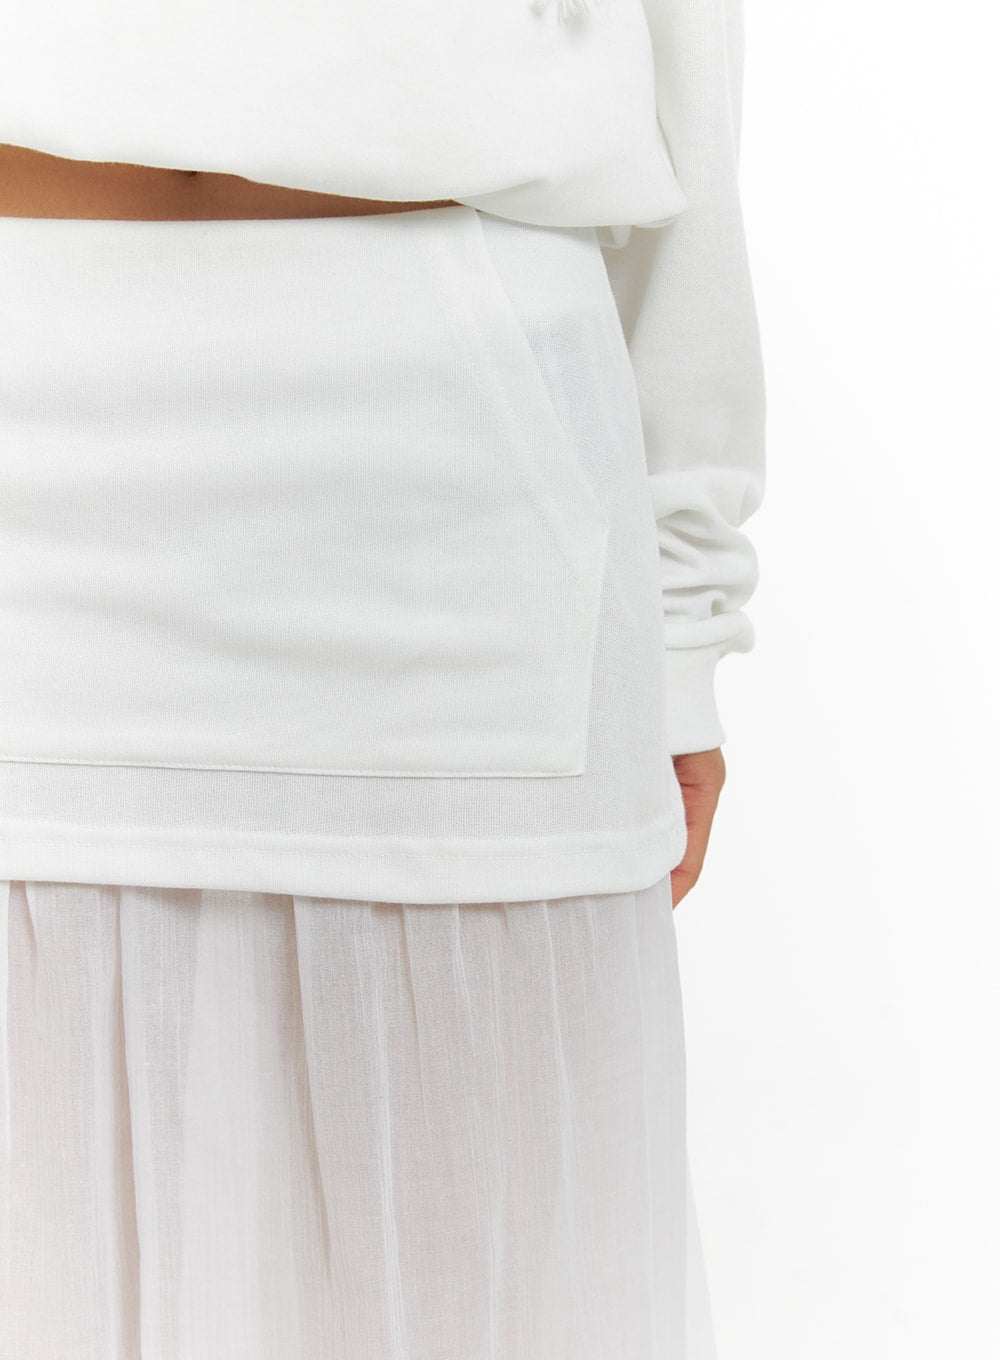 sheer-layered-maxi-skirt-cm426